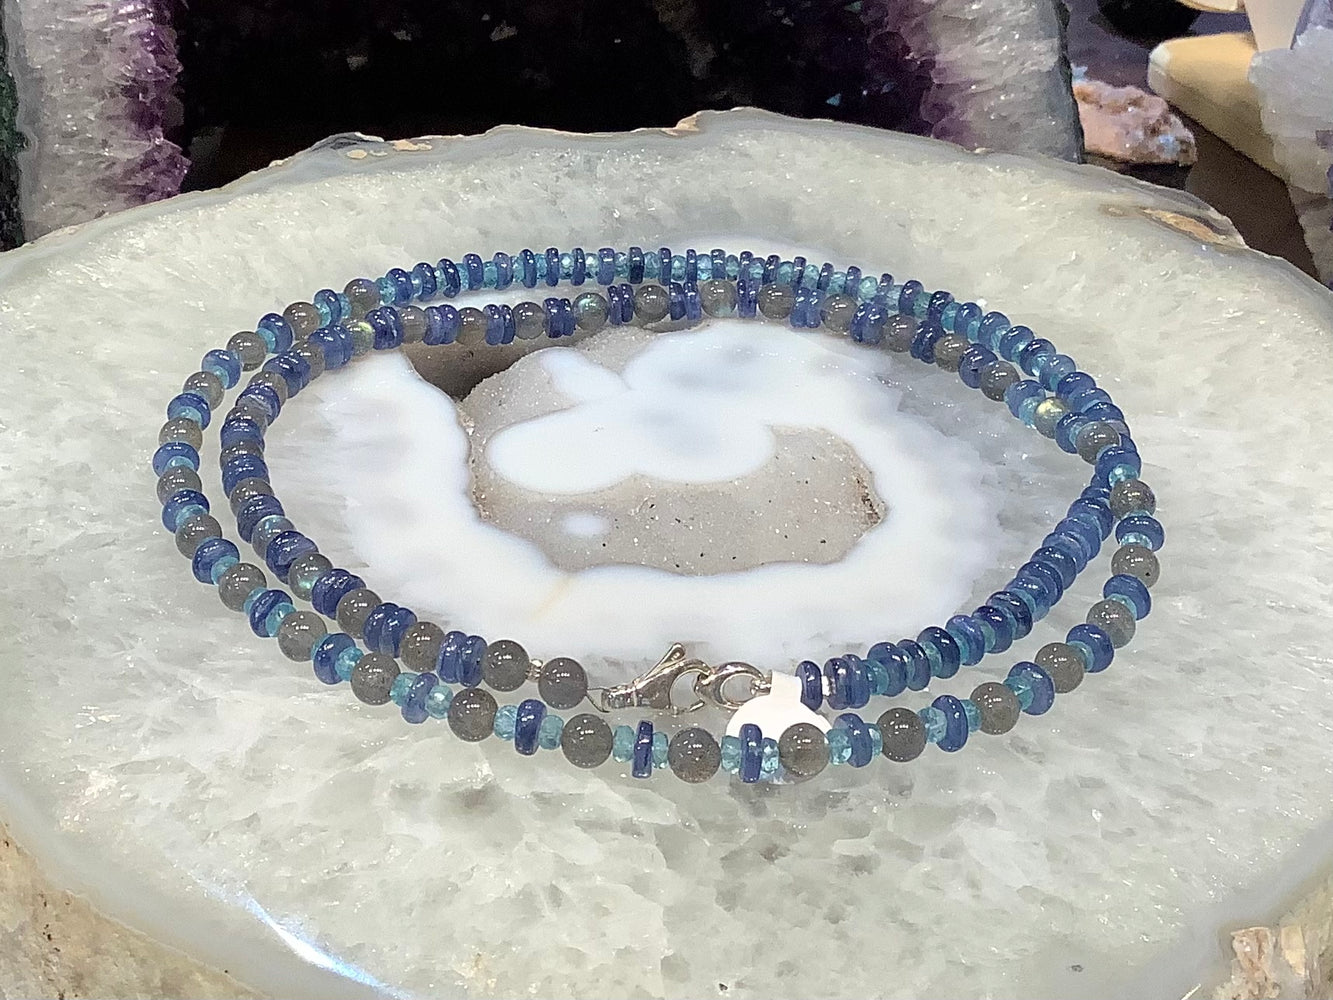 Superb Kyanite & labradorite gemstone necklace